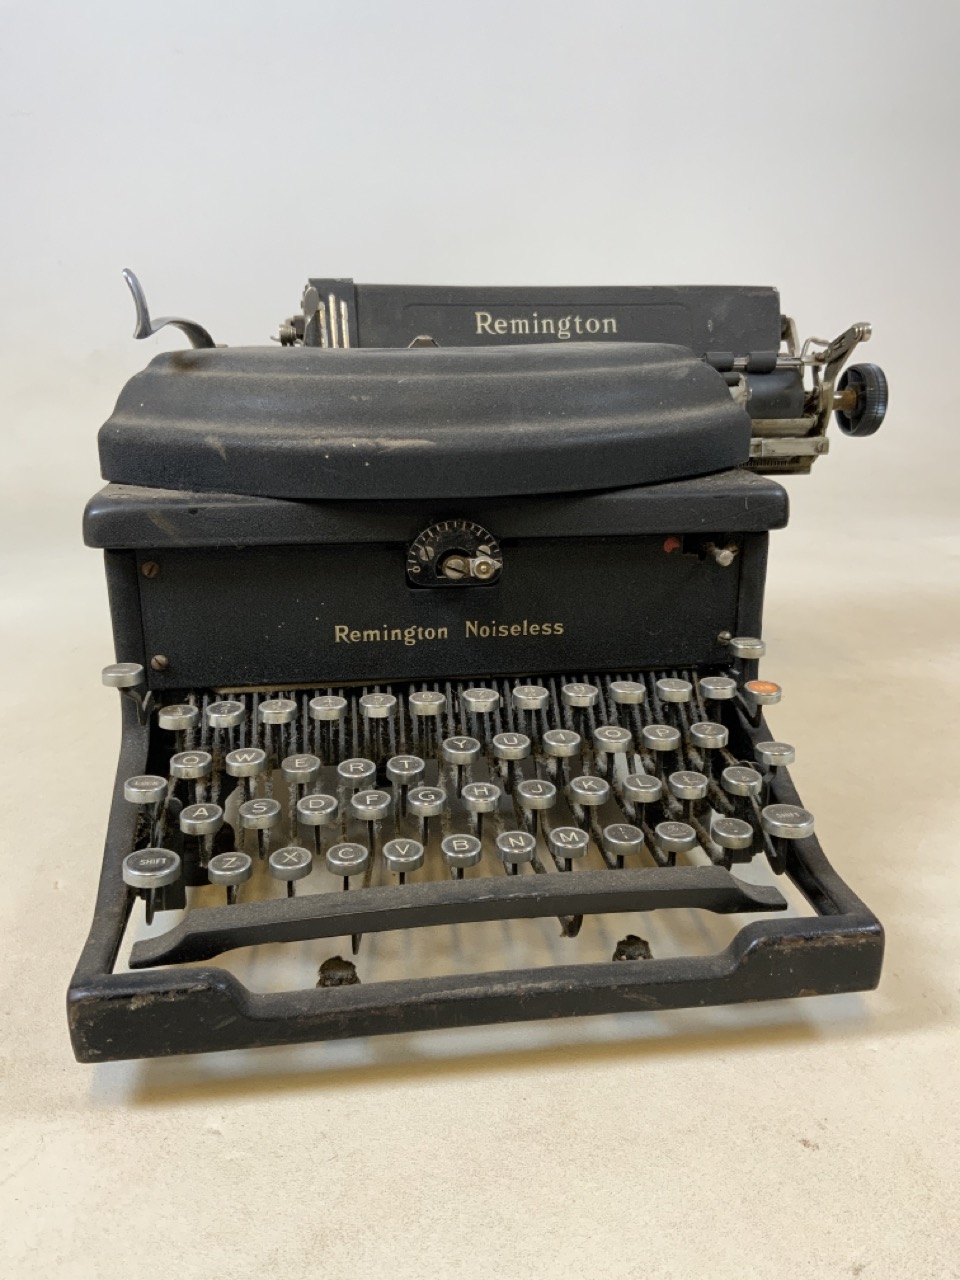 A Remington Noiseless typewriter.